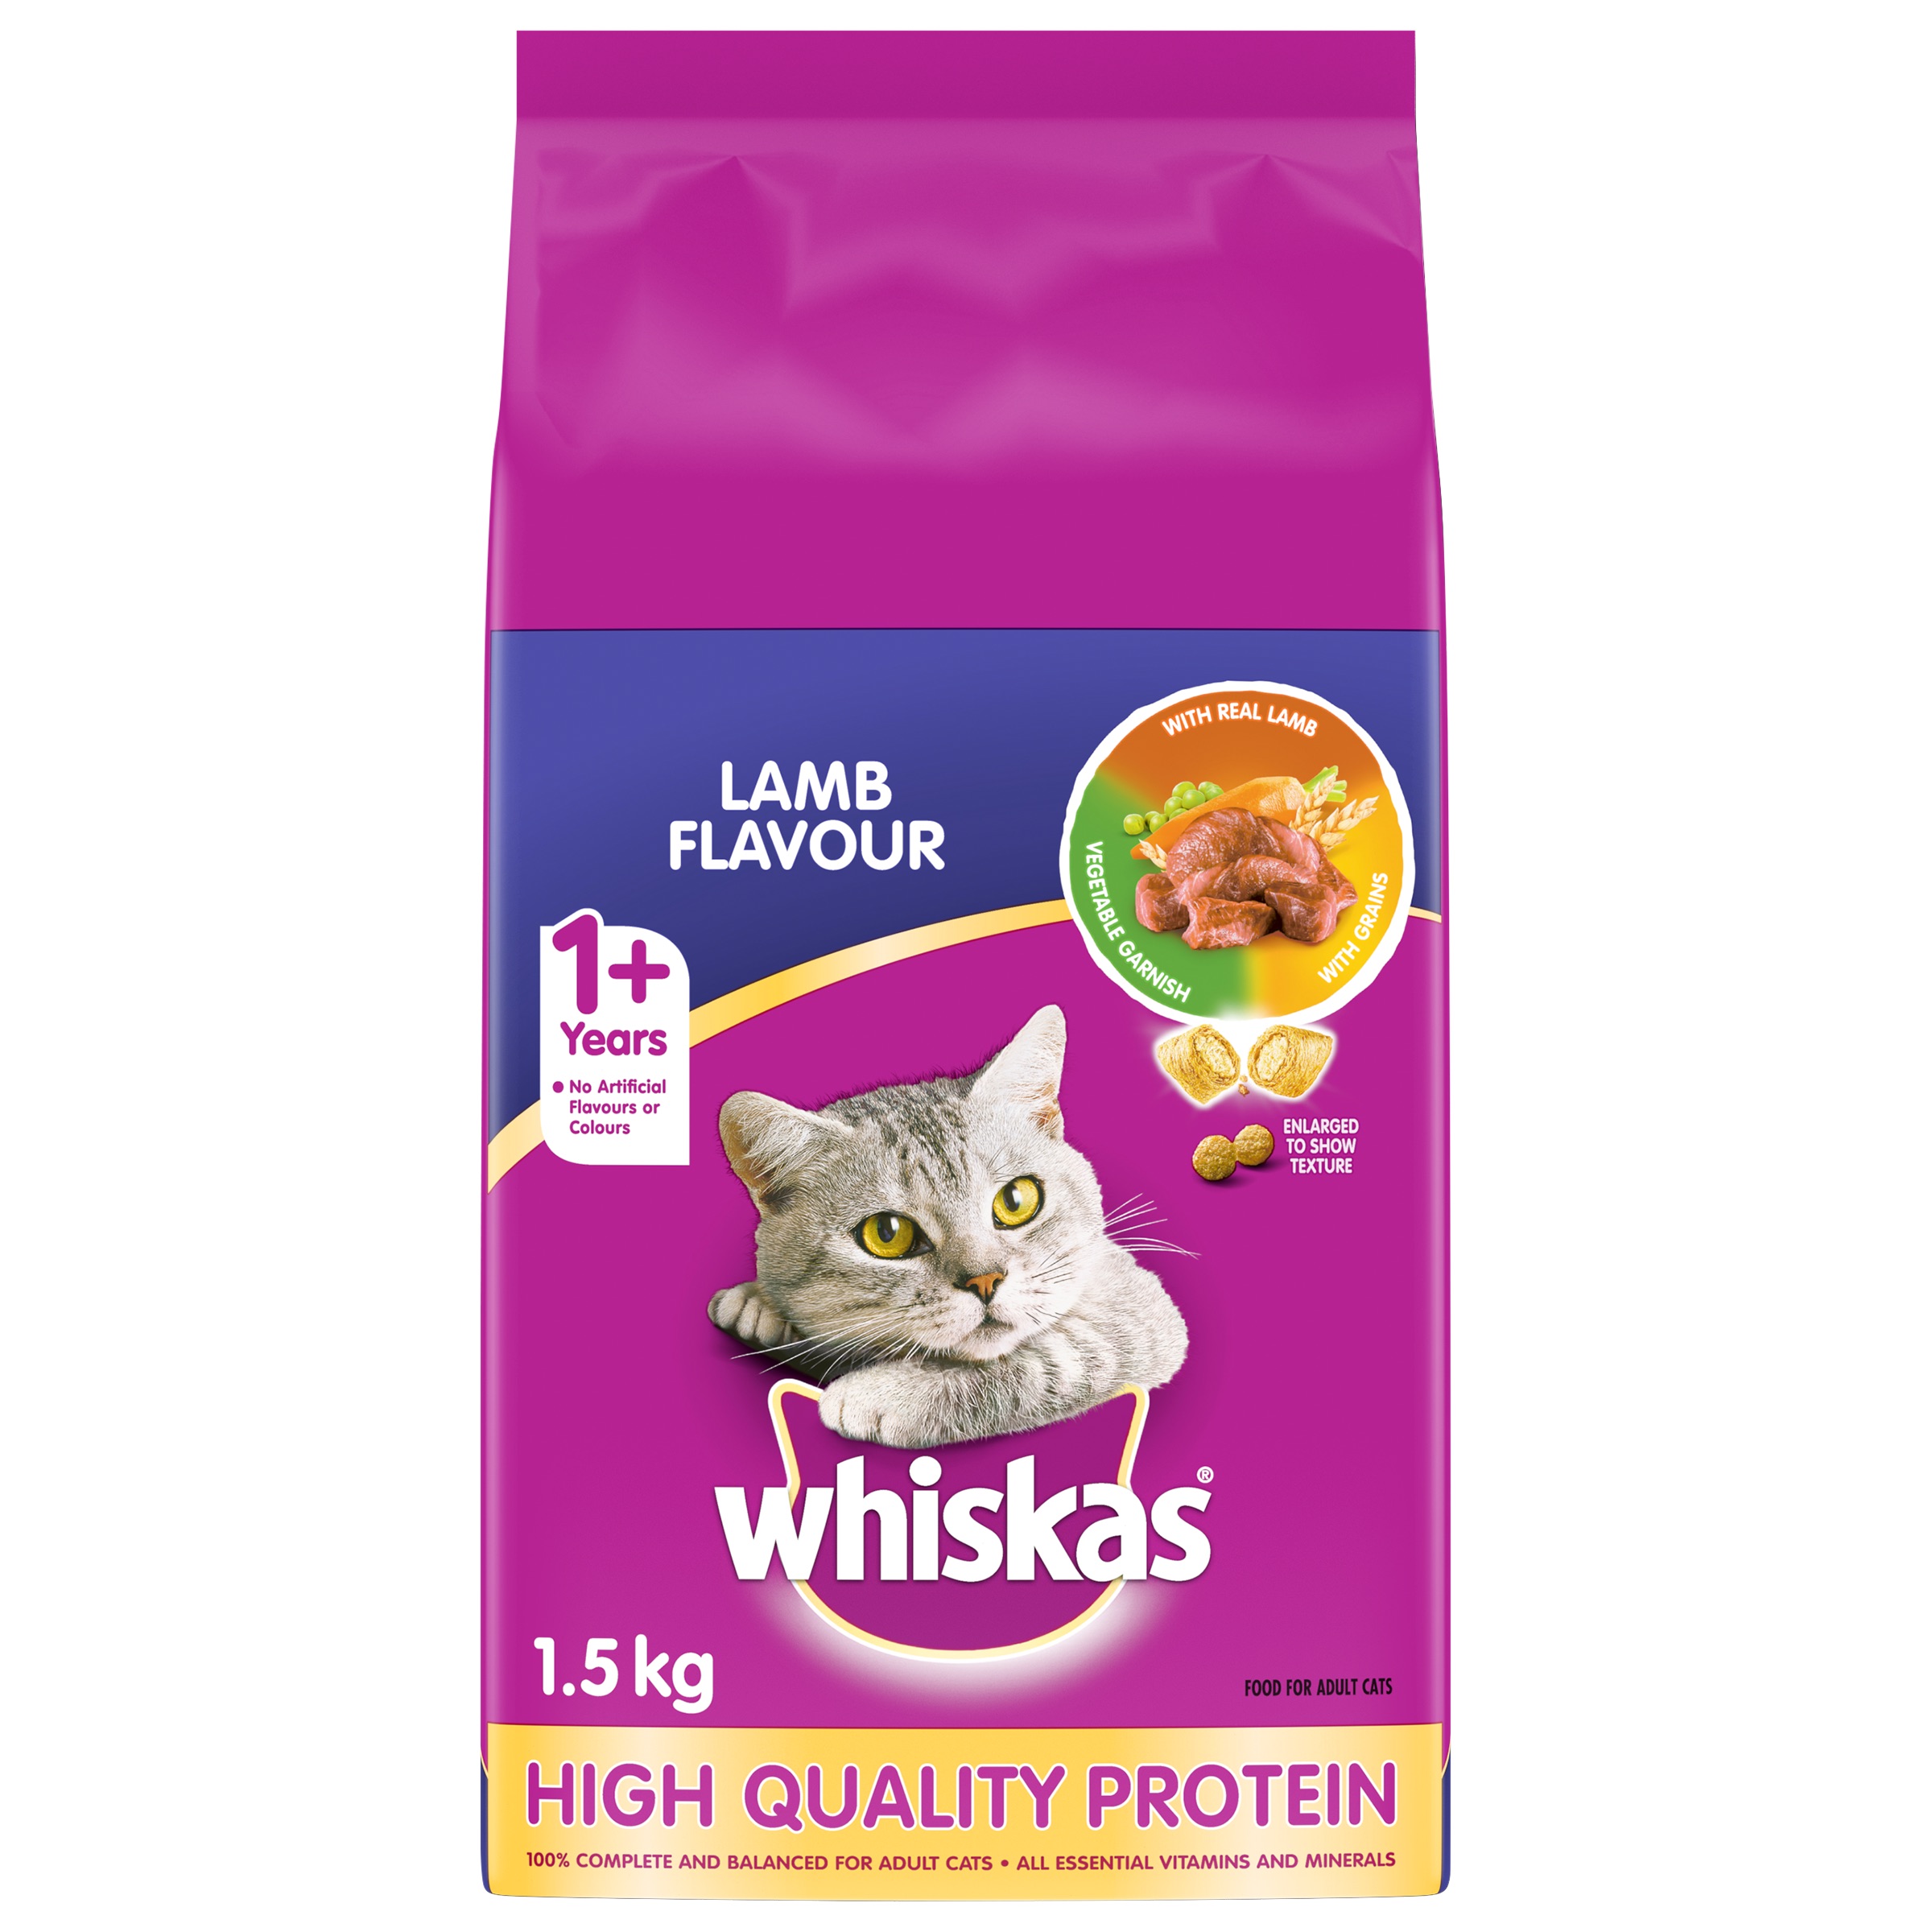 WHISKAS® Adult Dry Cat Food Lamb Flavour 1.5kg Bag image